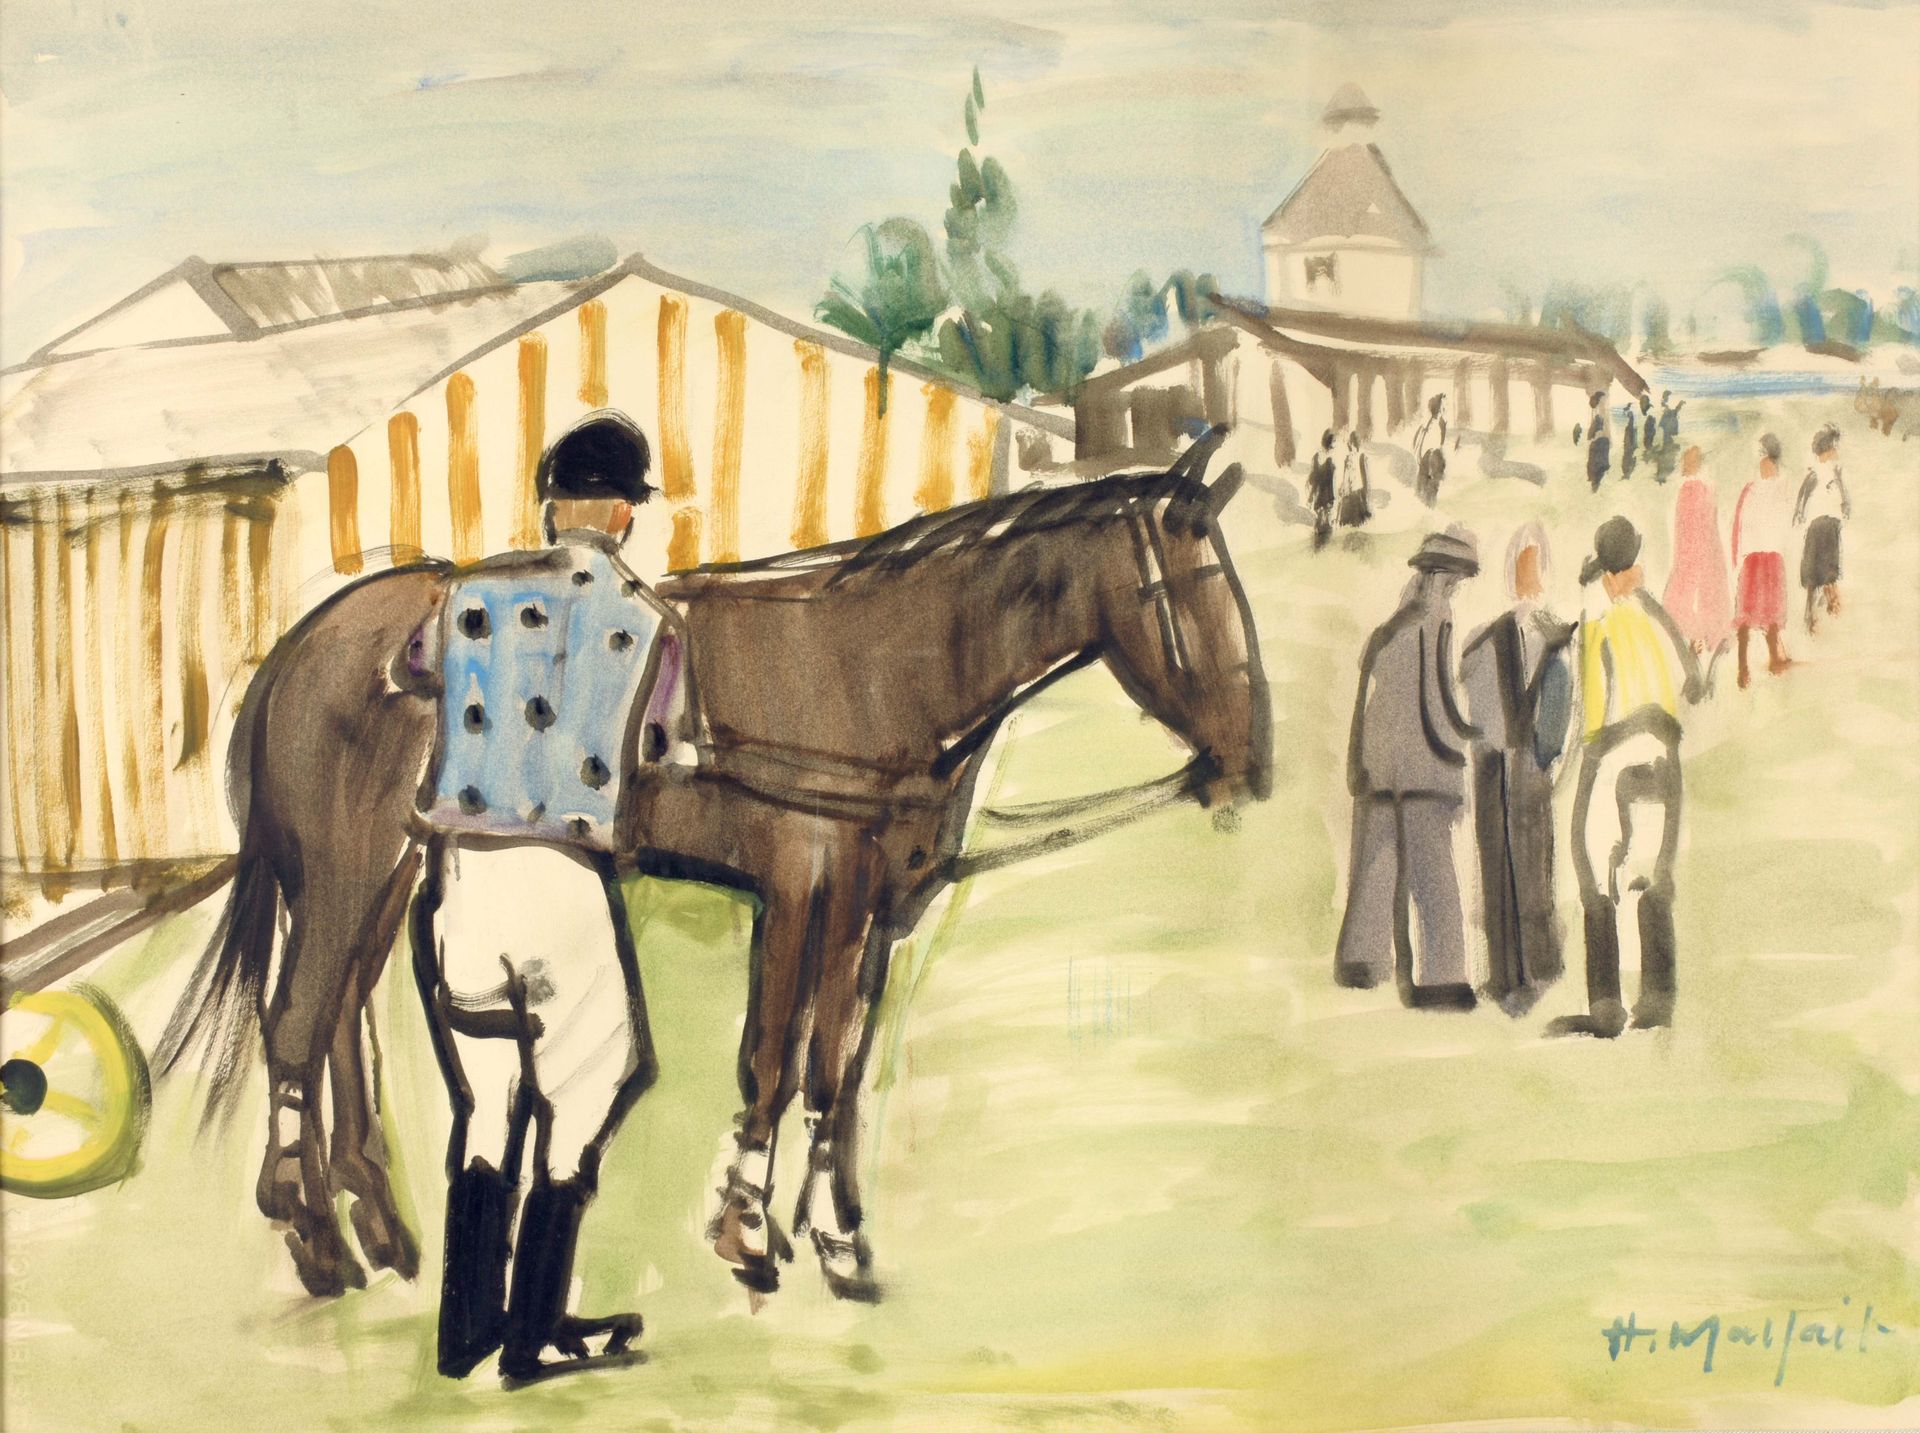 MALFAIT, Hubert (1898-1971) Ruiter en paard op renbaan

Aquarel (53 x 70 cm), ge&hellip;